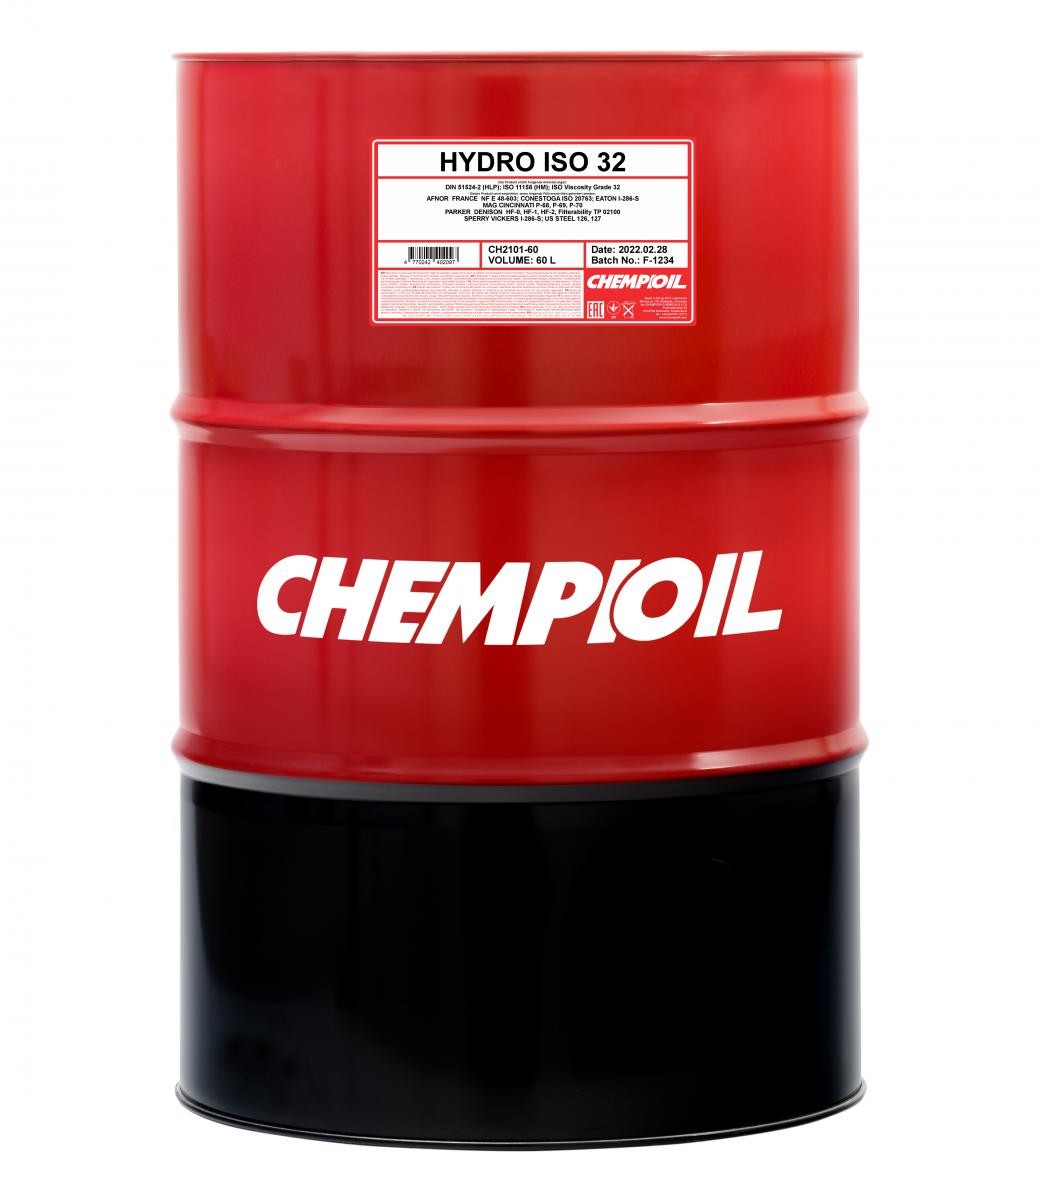 CHEMPIOIL Hydro, ISO 32 Capacity: 60l ISO 11158 HM, DIN 51524-2 HLP, Afnor NF E 48 Hydraulic fluid CH2101-60 buy